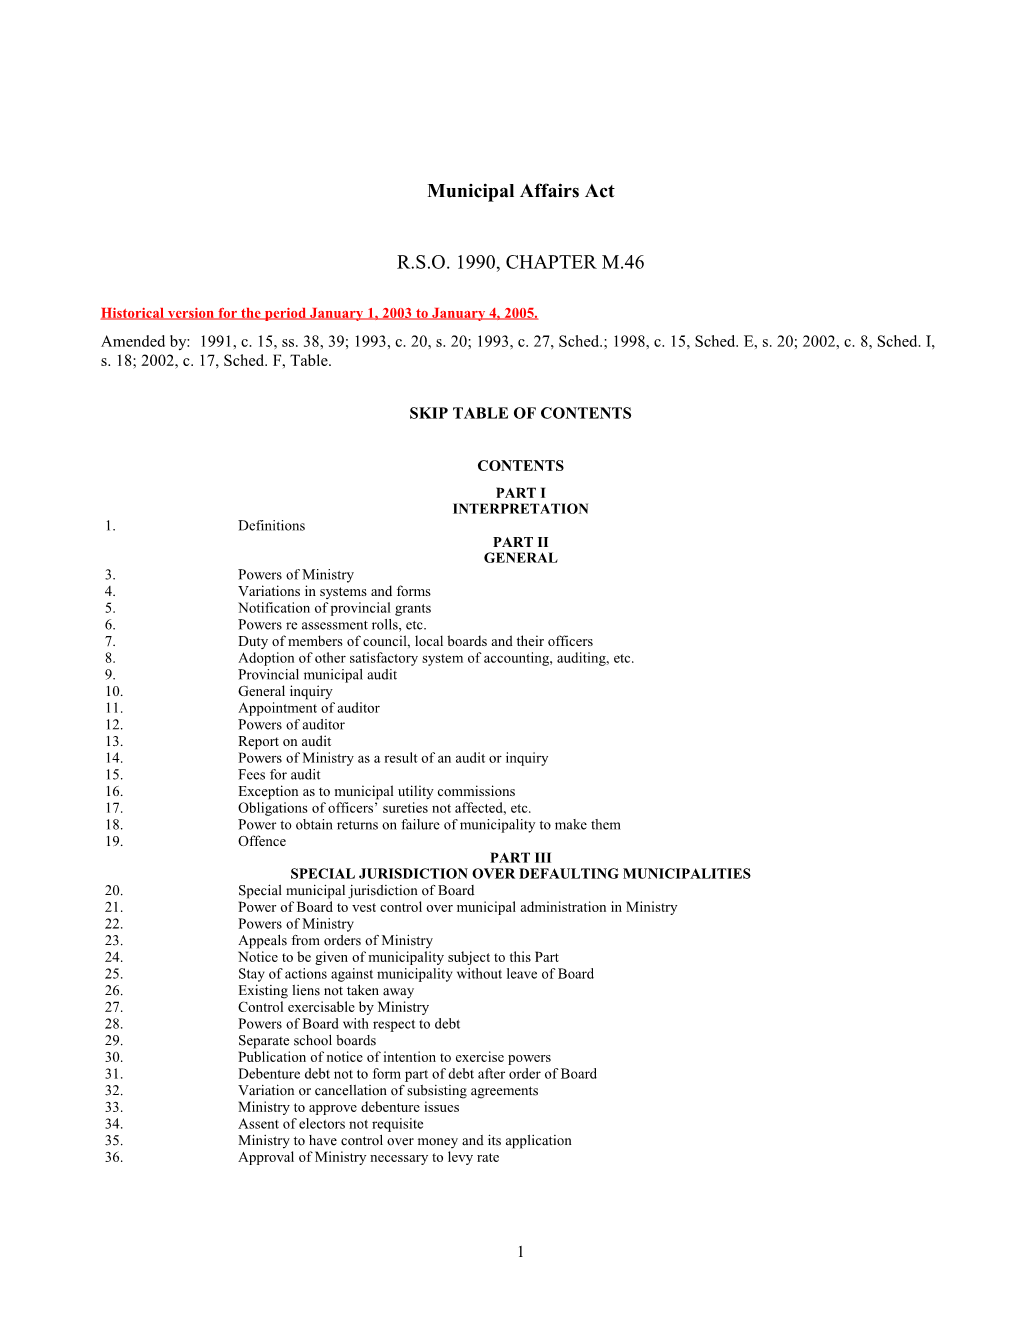 Municipal Affairs Act, R.S.O. 1990, C. M.46